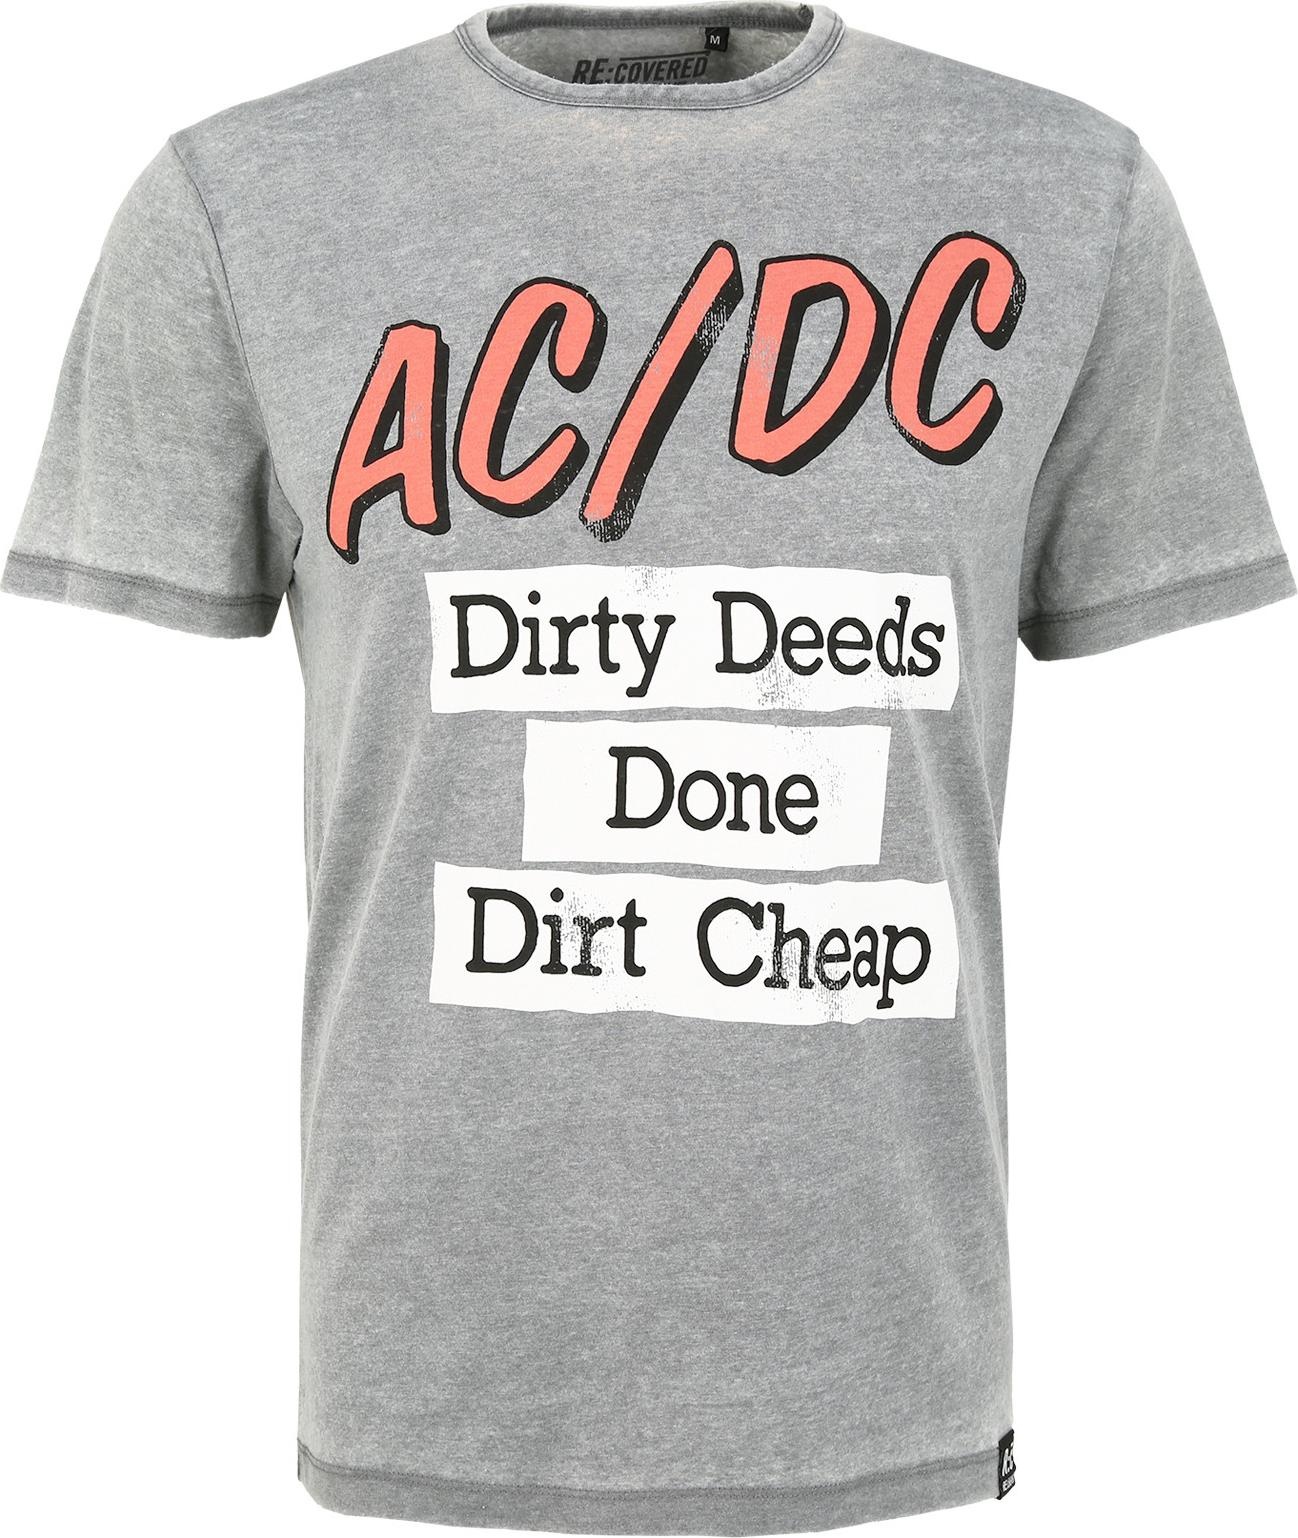 Recovered, Herren, Shirt, ACDC Dirty Deeds Done Cheap Light Grey, Grau, (S)